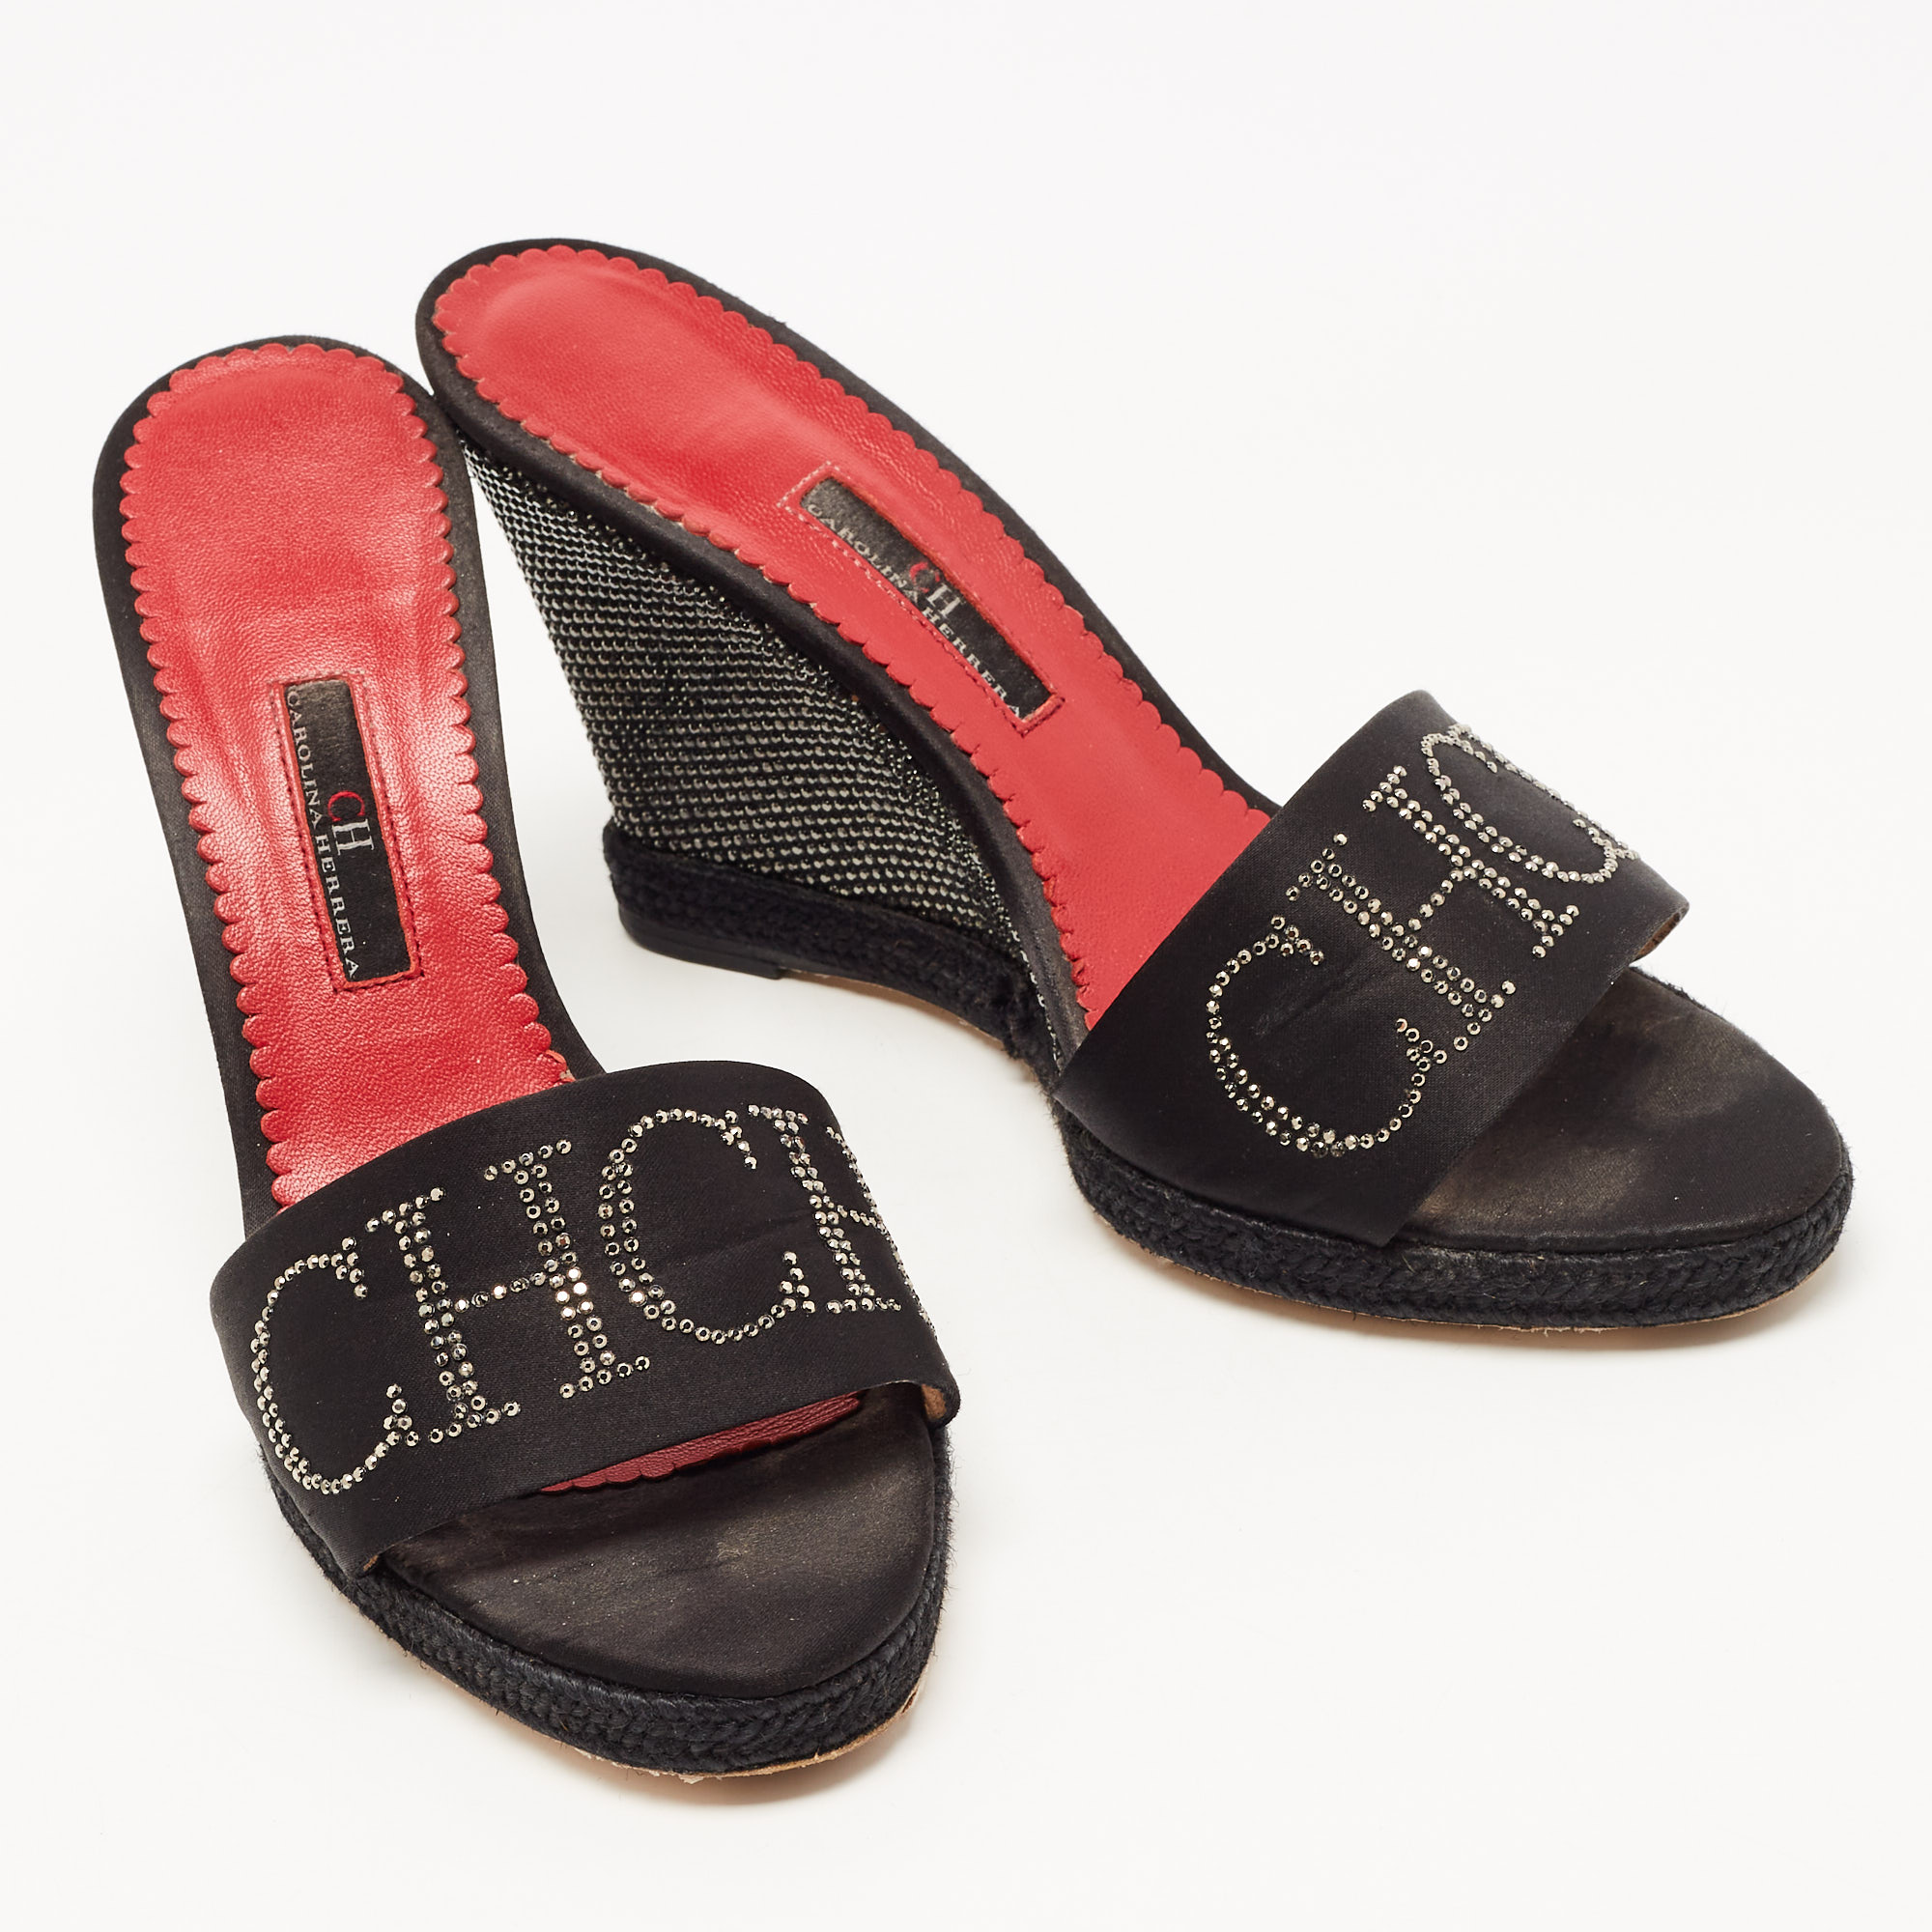 CH Carolina Herrera Black Satin Studded Wedge Sandals Size 38